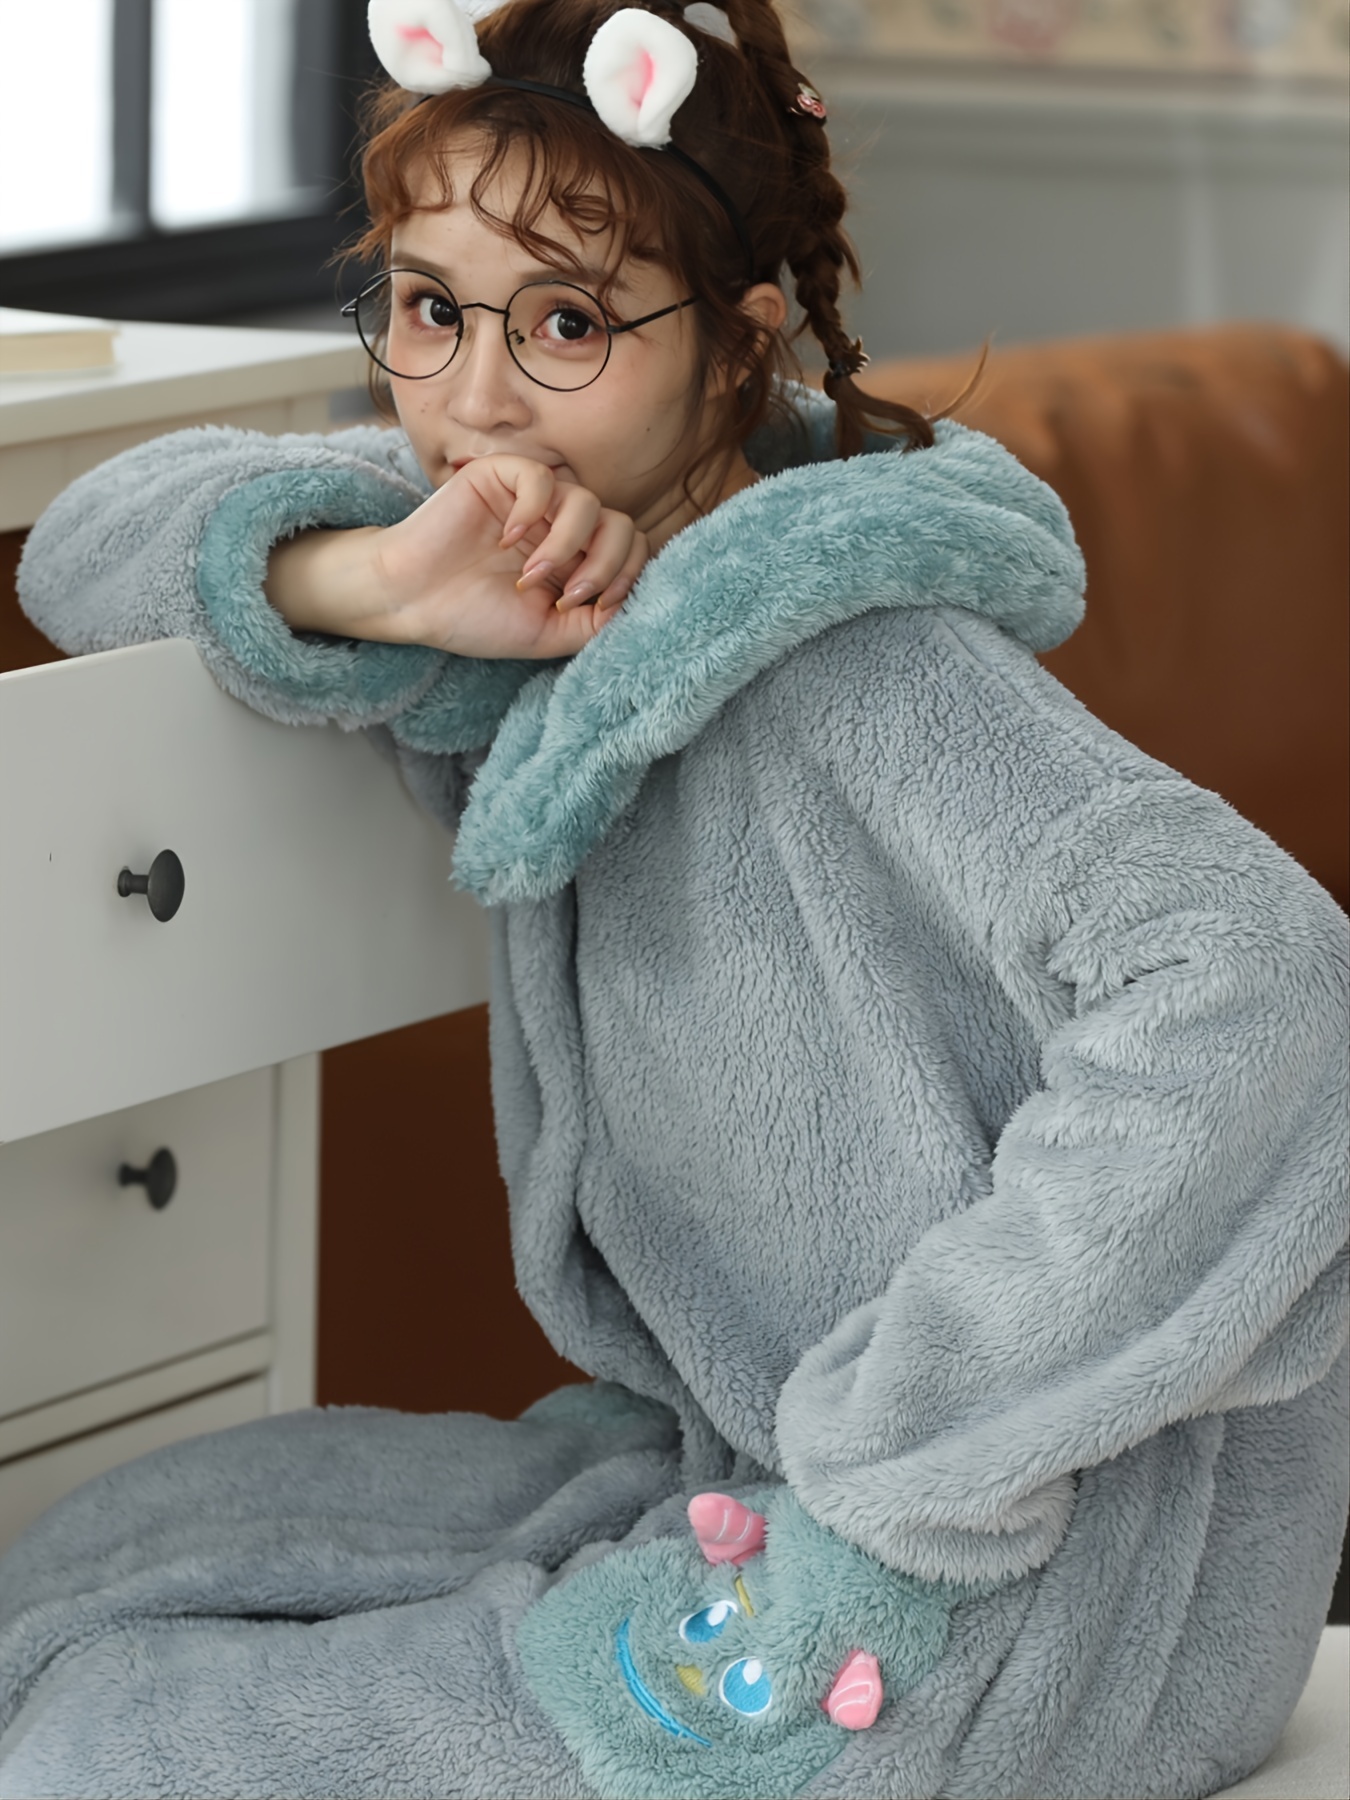 Soft & Cute Thick Fuzzy Hoodie Pajamas Set, Button Up Pajama Outerwear,  Women's Loungewear & Sleepwear